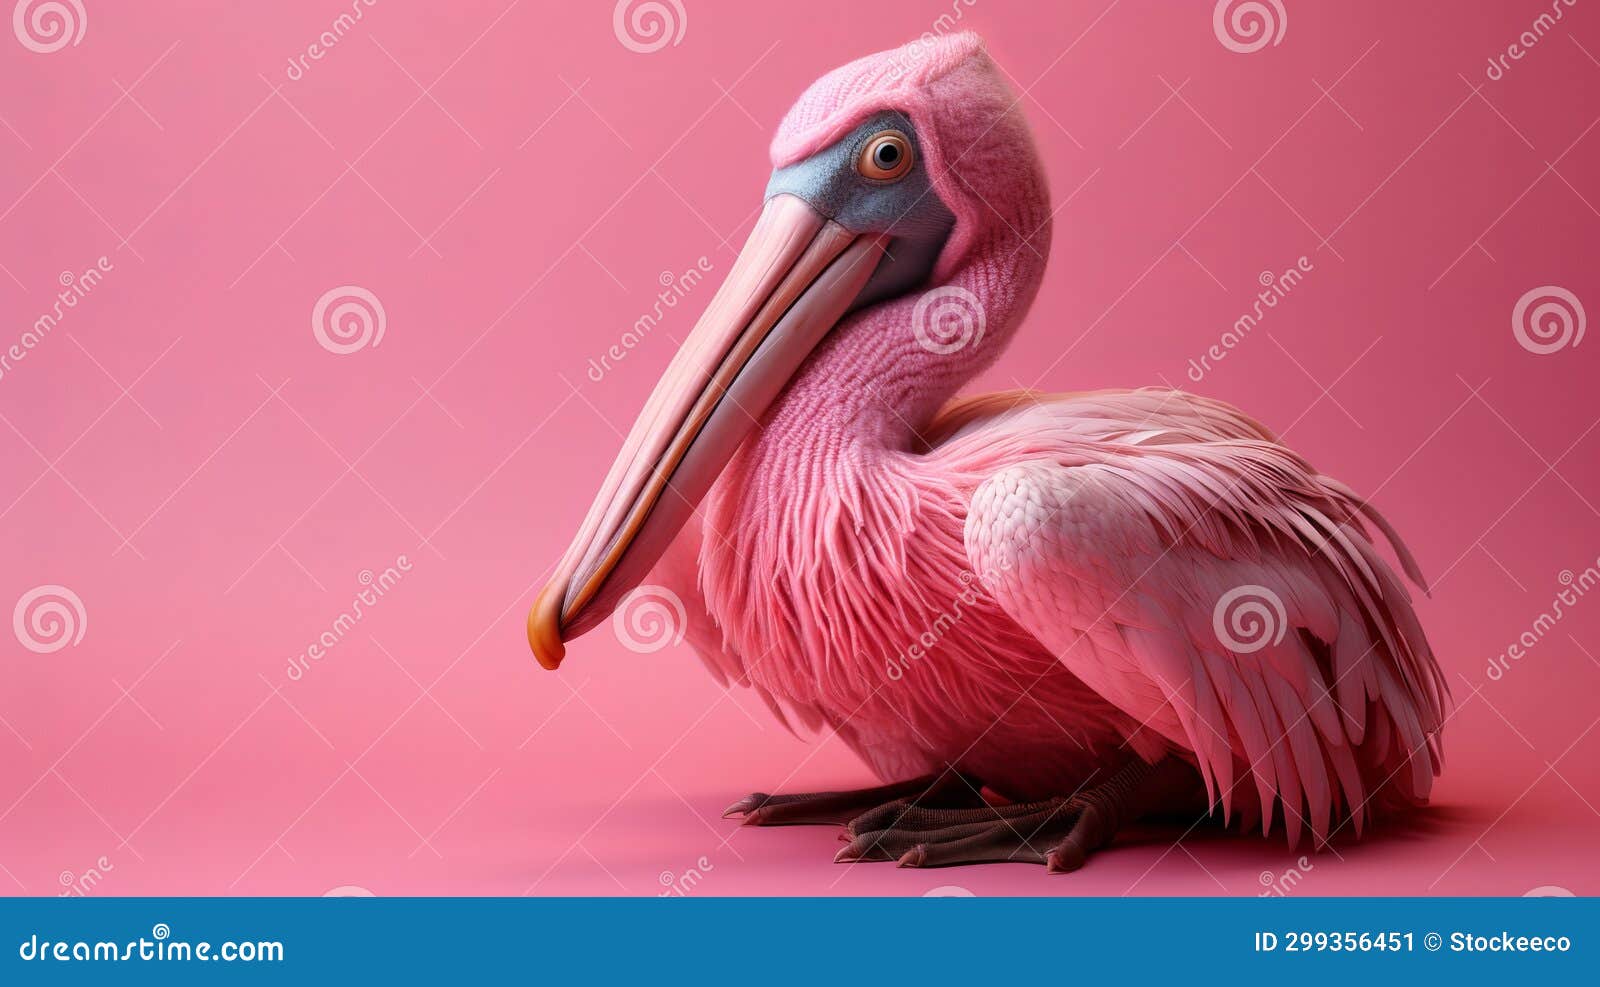 realistic pink pelican digital bird art in zbrush style